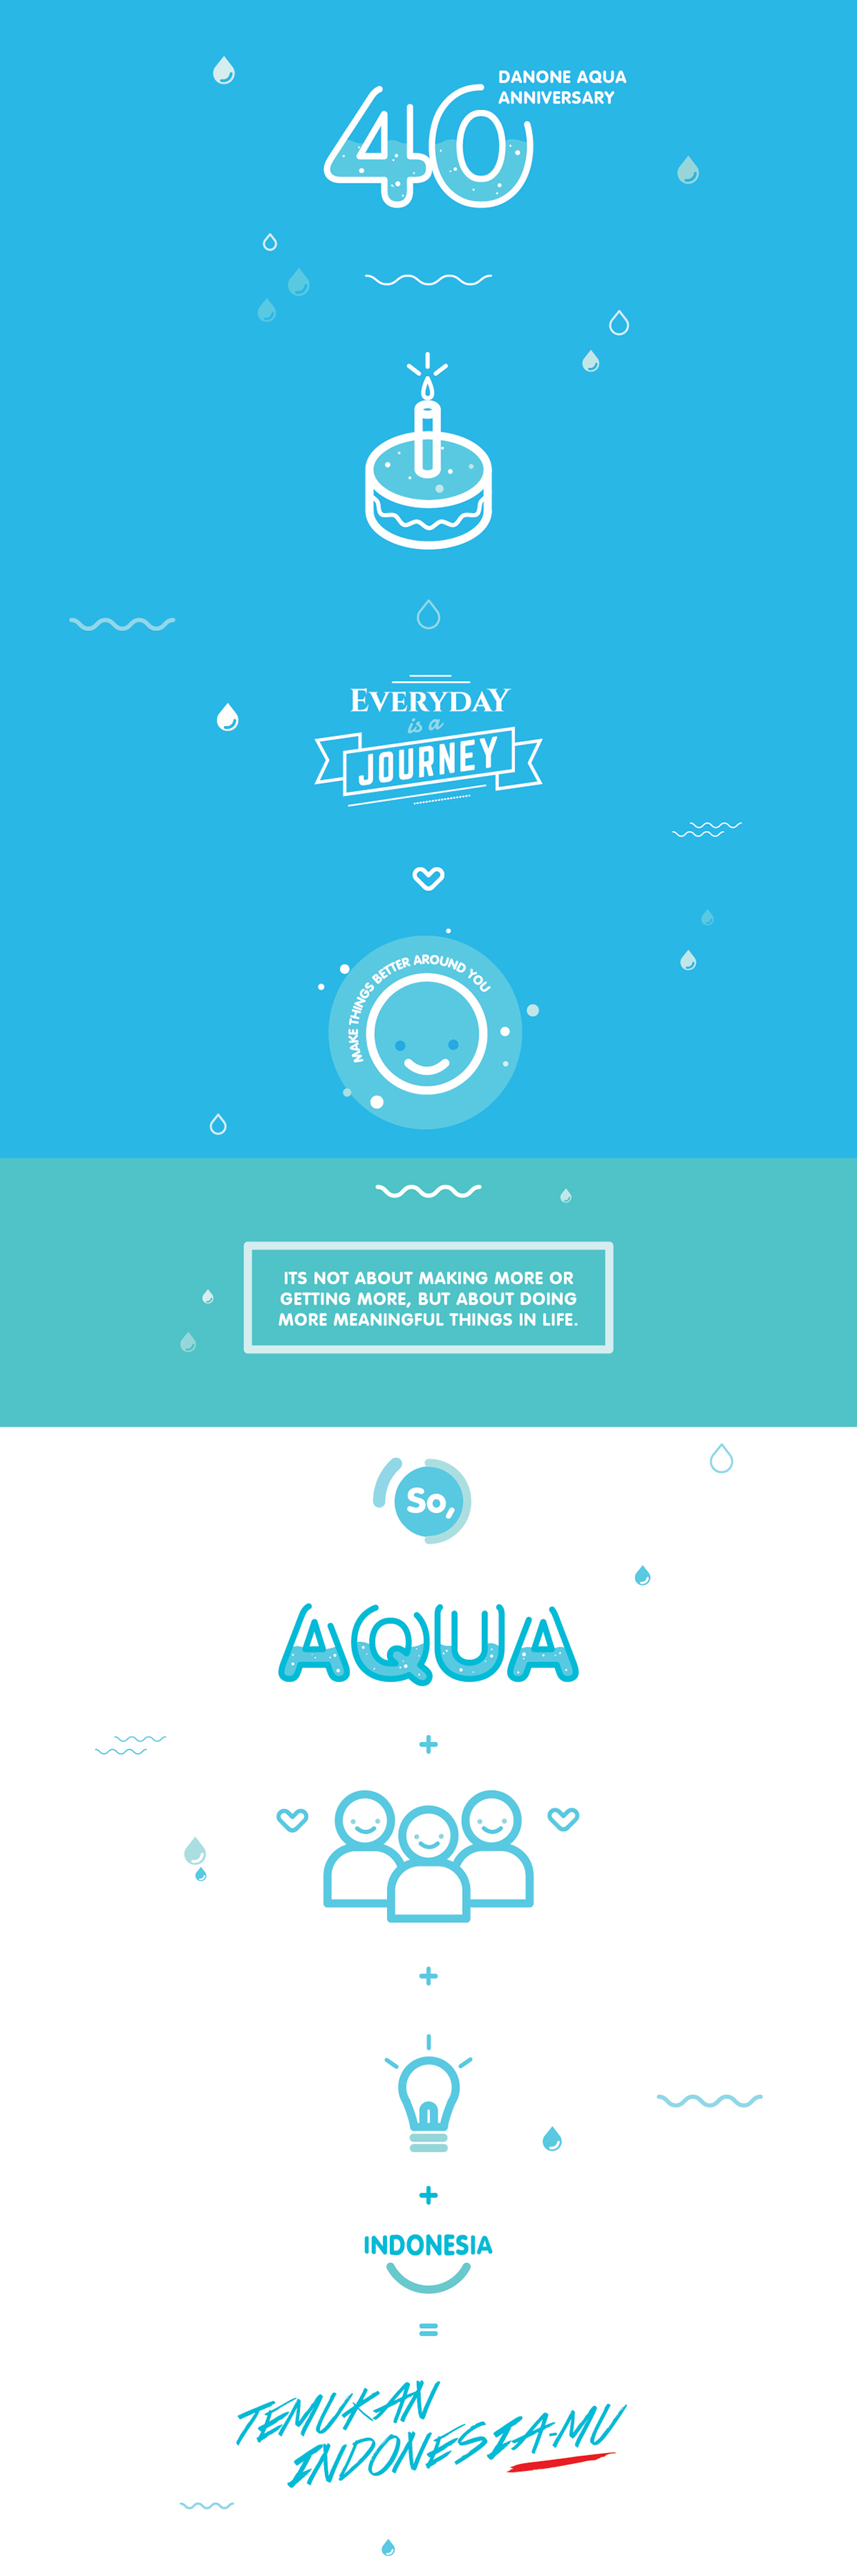 concept Brand Activity aqua Danone indonesia Temukan Indonesiamu anniversary culture infographic presentation pictogram mark symbol flat design vector